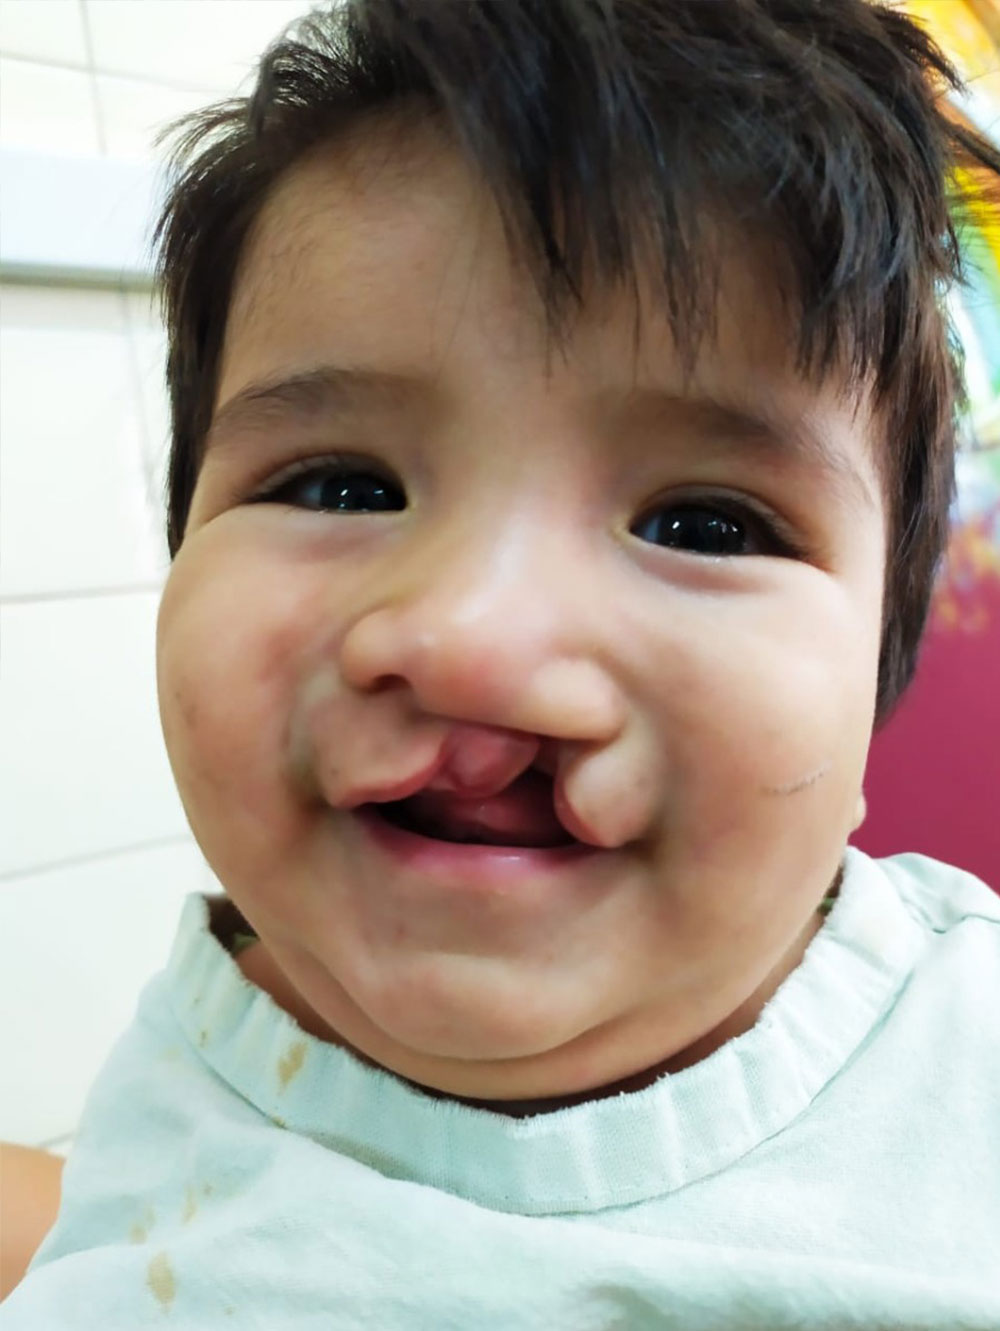 Felix antes de sua cirurgia de lábio leporino gratuita patrocinada pela Smile Train na Argentina